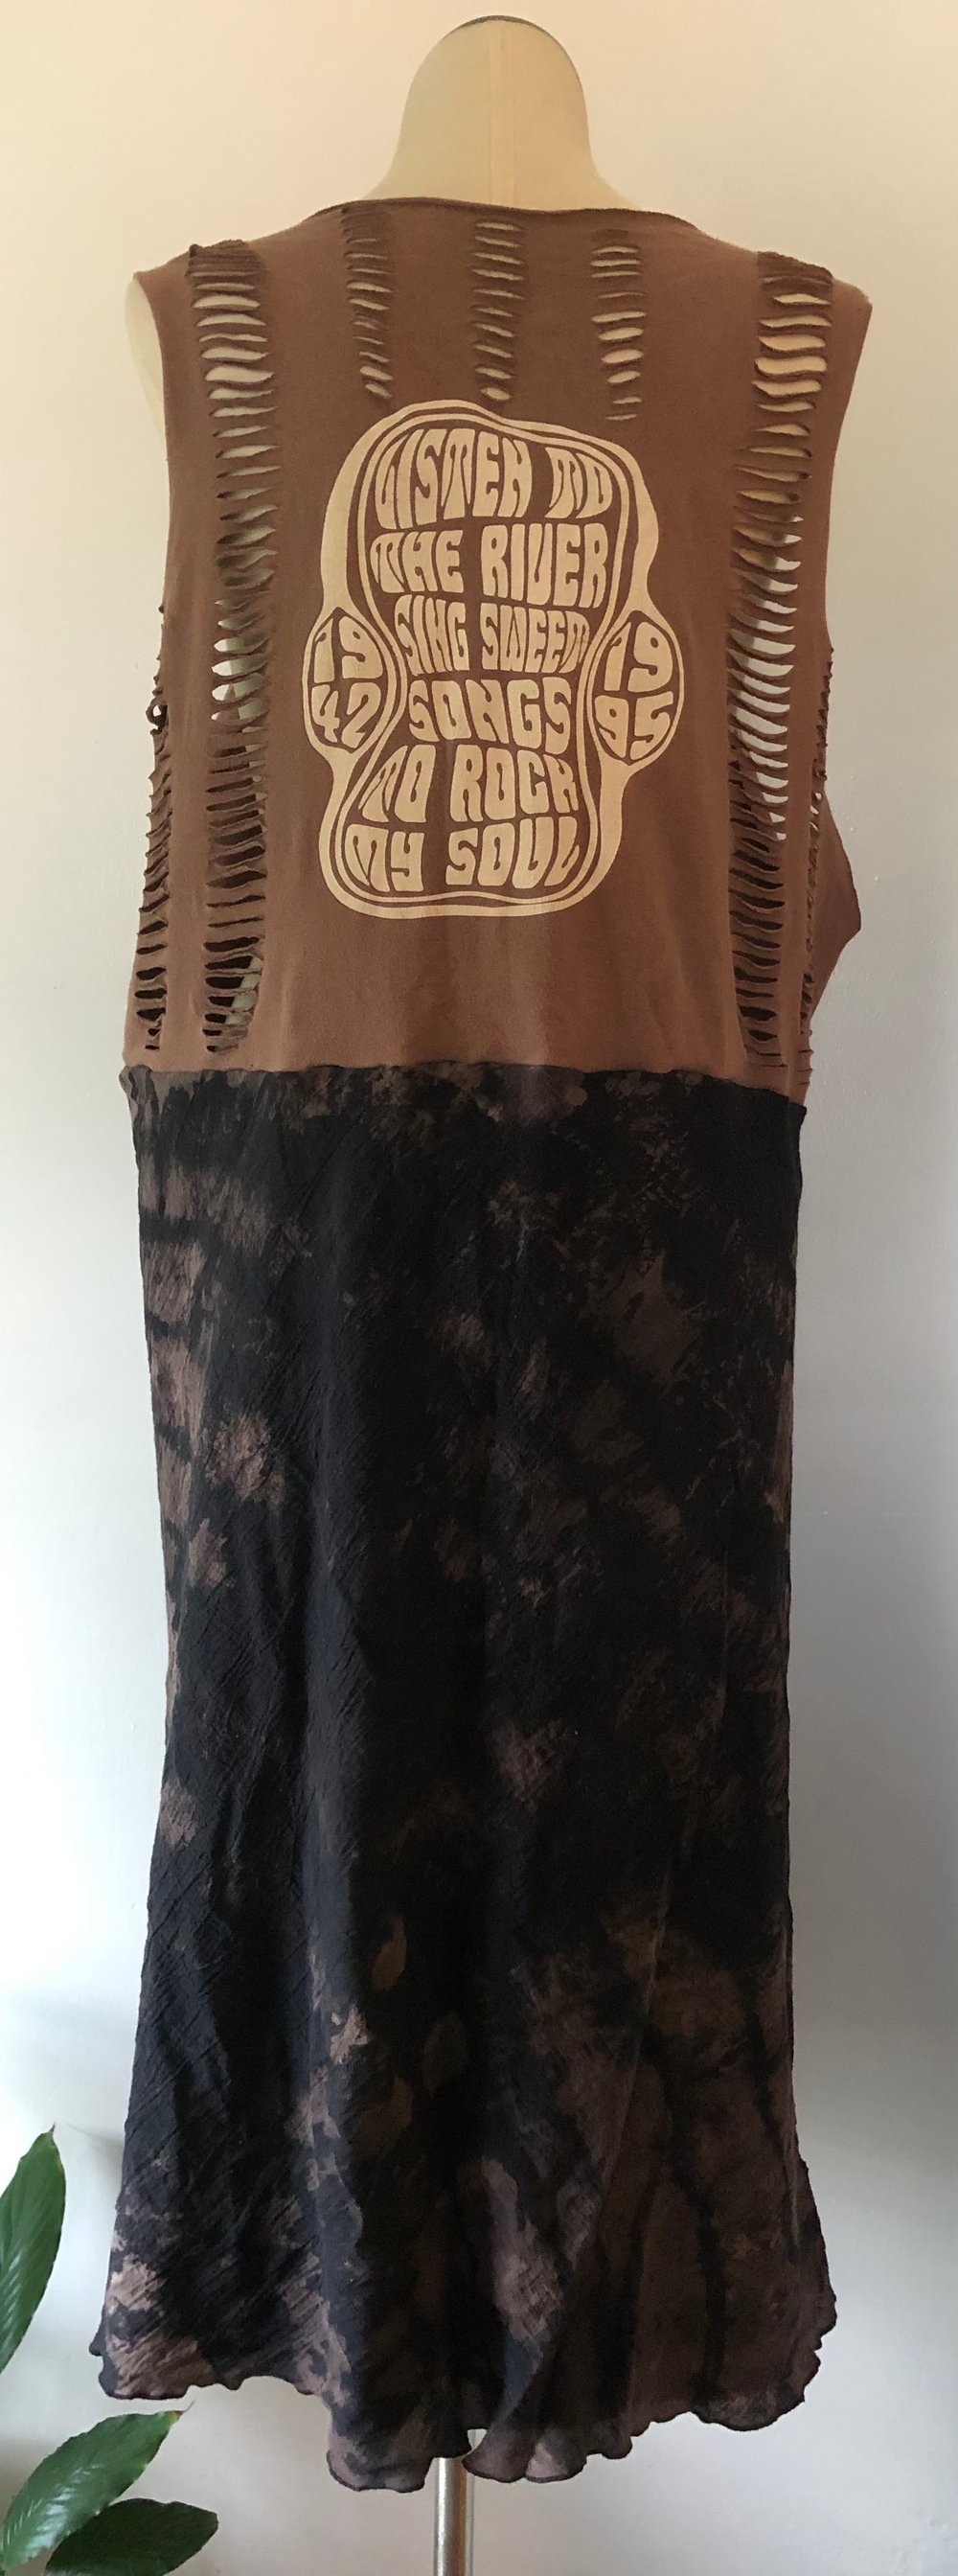 Upcycled “Jerry Garcia” t-shirt maxi dress